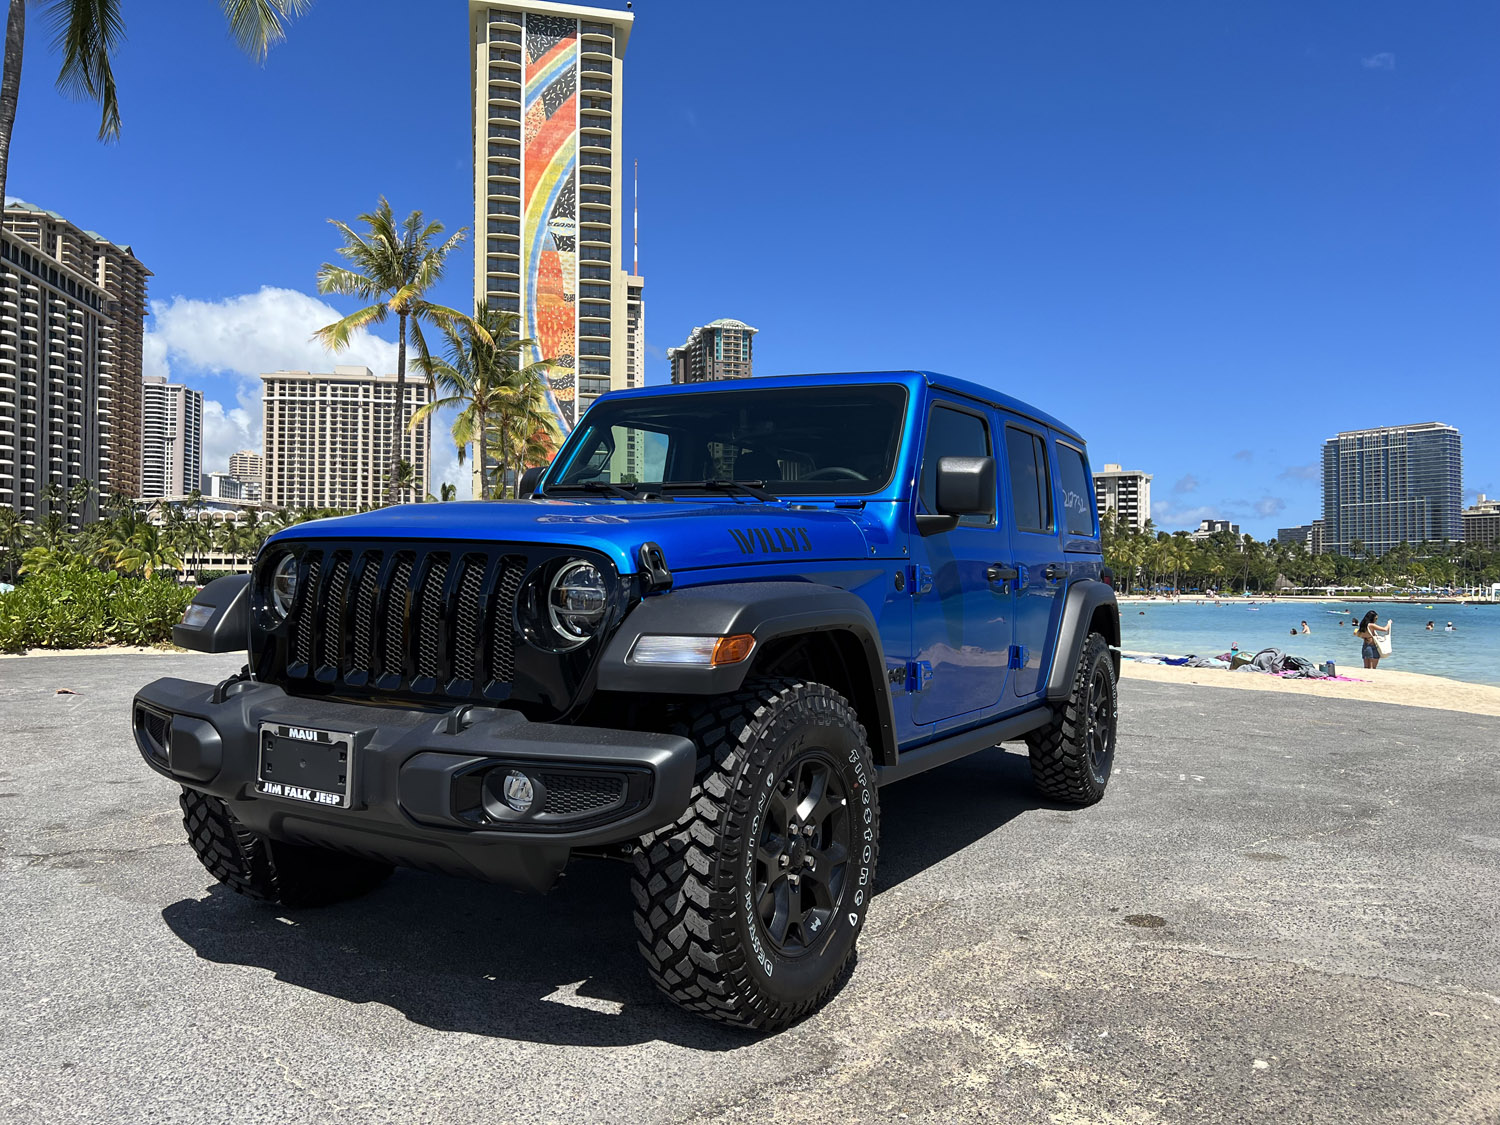 Florida Road Trip Jeep Rental